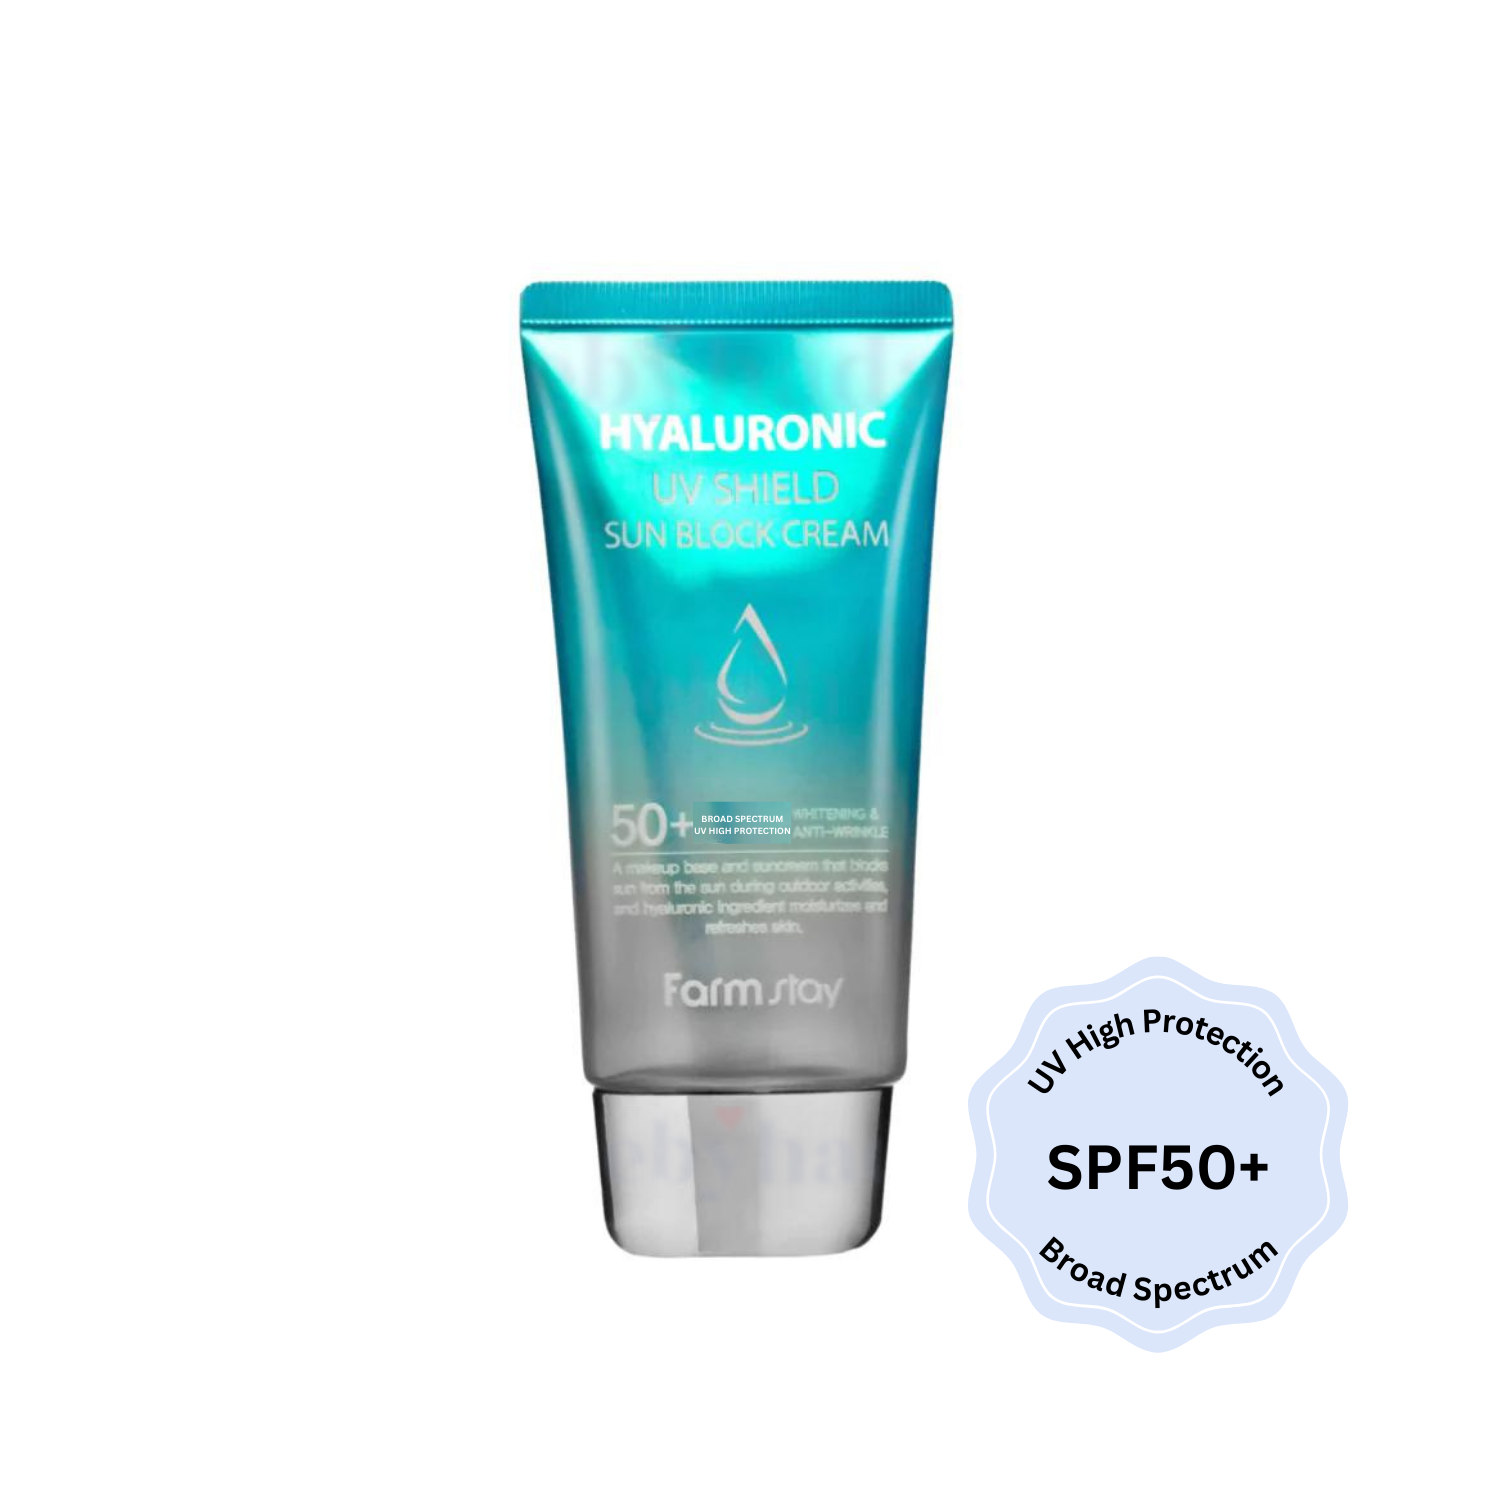 Hyaluronic UV Shield Sun Cream SPF50+ Broad Spectrum